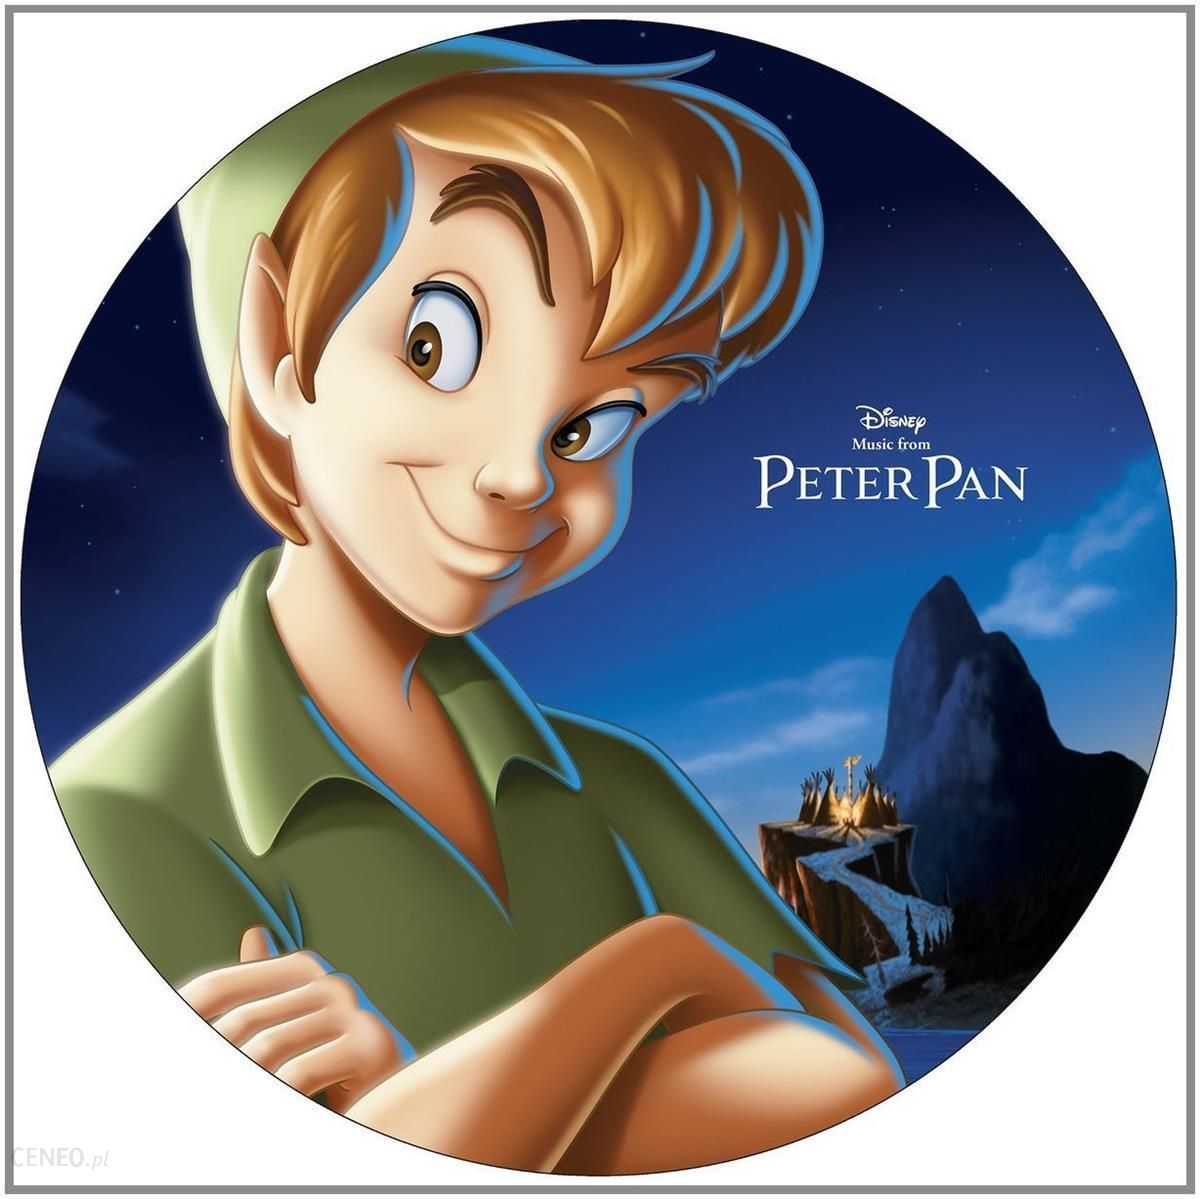 Питер пэн песни. Peter Pan. Peter Pan Musical. Питер Пэн пластинка. Дисней музыка.